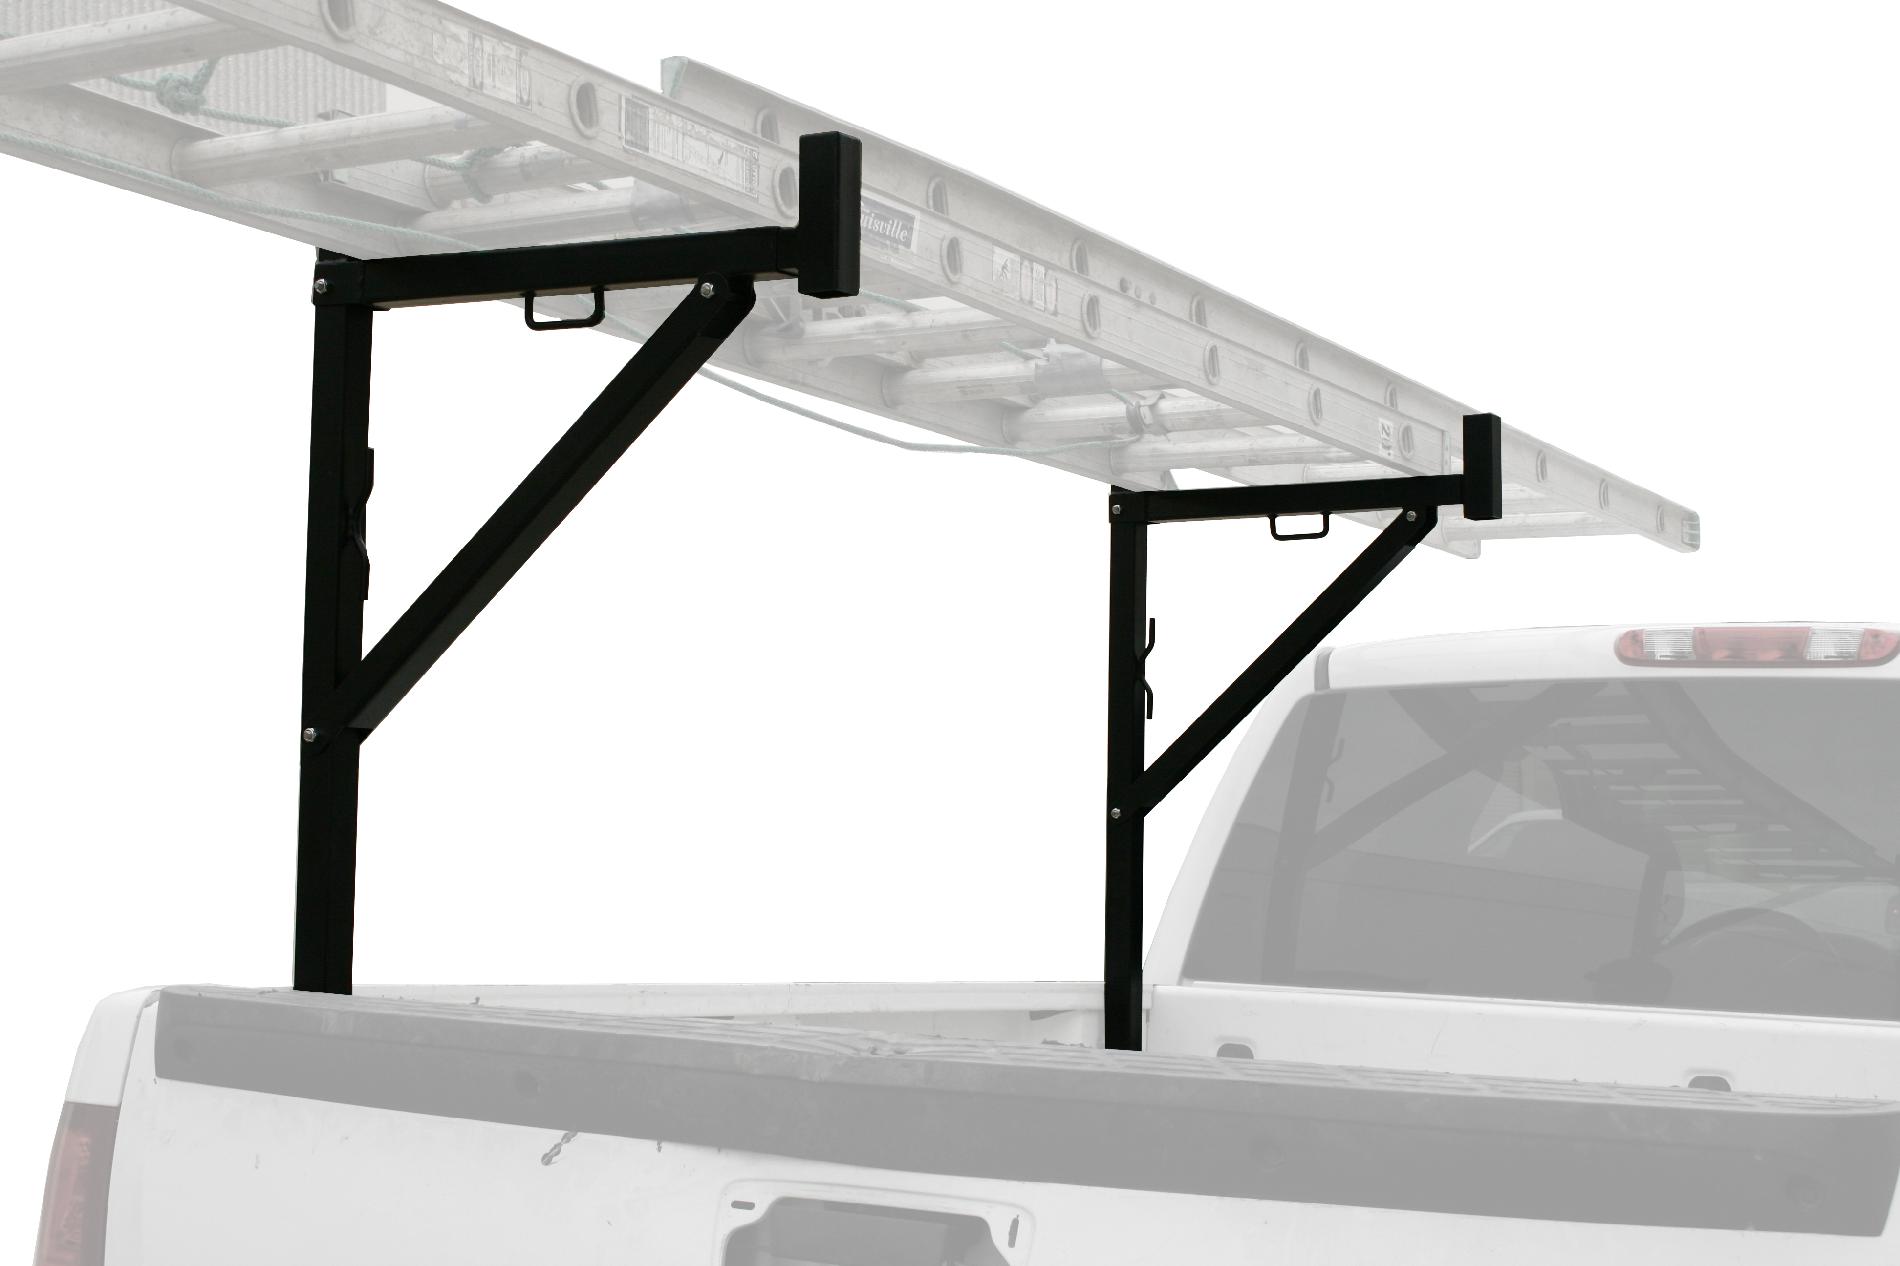 MAXXHAUL  Heavy duty Utility/Ladder Rack